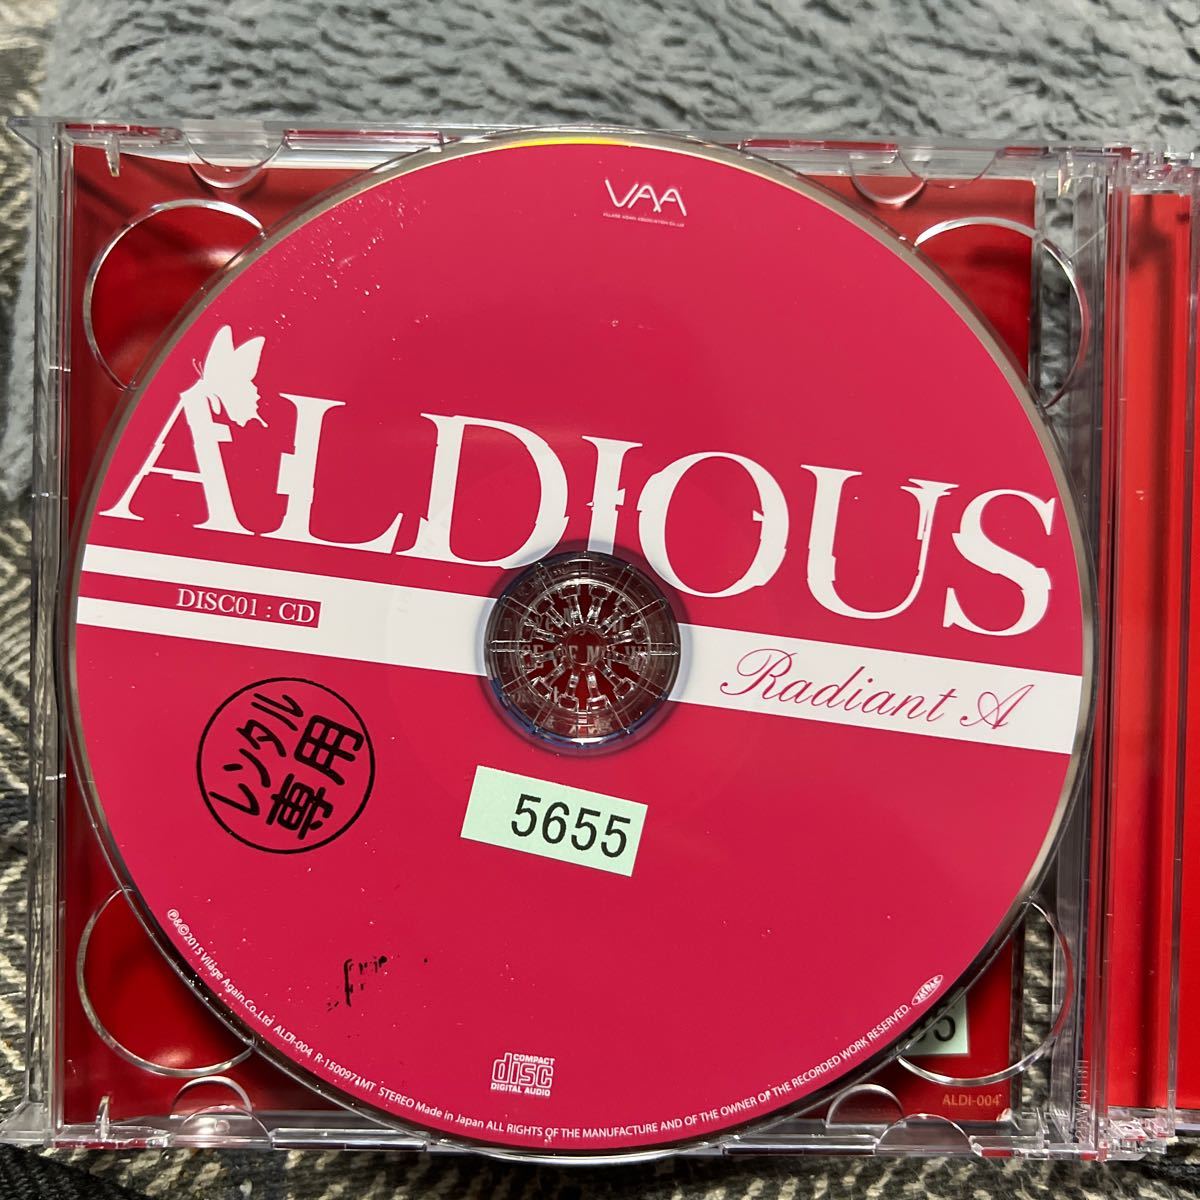 CD +DVD ALDIOUS/ Radiant A アルディオス　ALDI-004